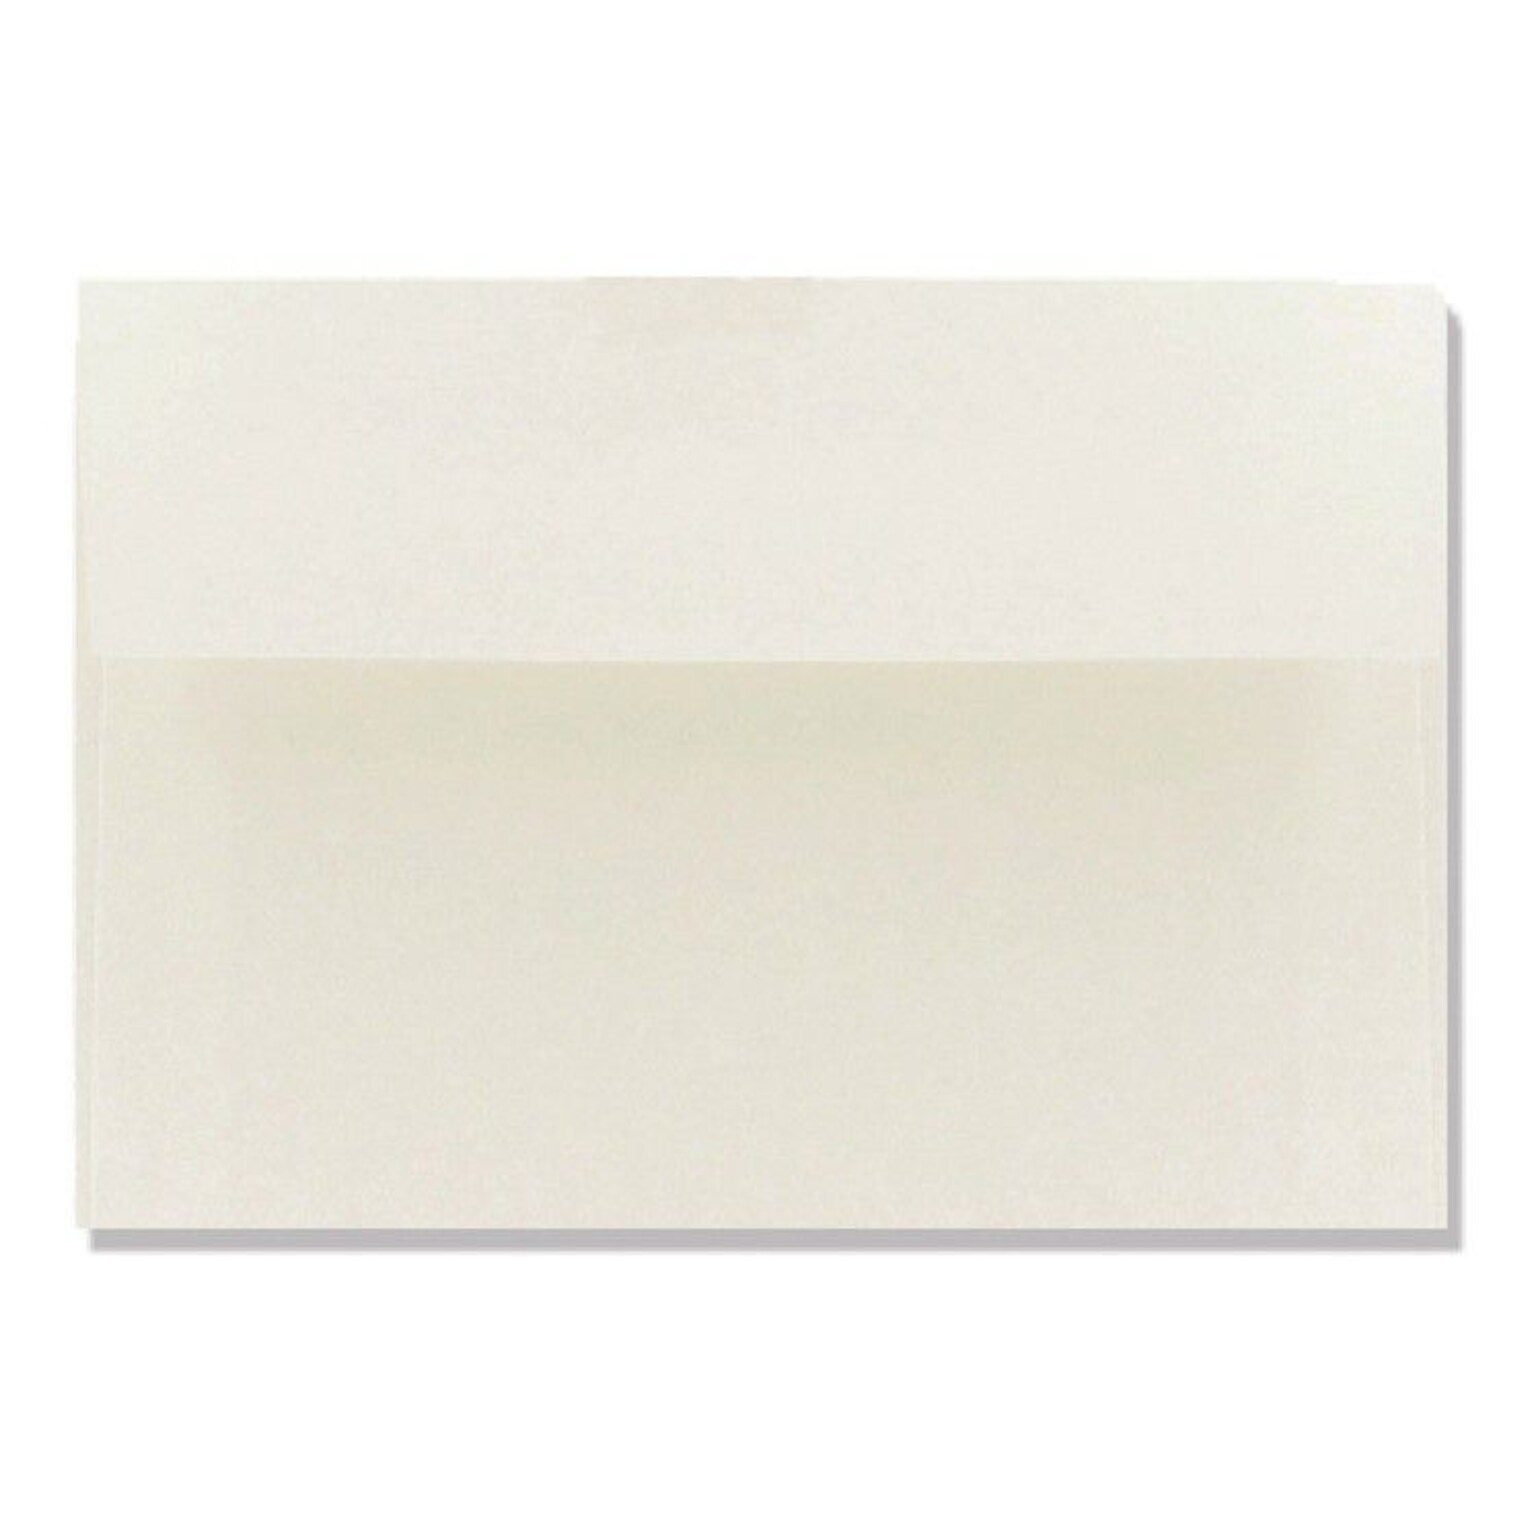 Cotton 80lb 5 3/4x8 3/4 A9 Invitation Envelopes W/Peel&Press, Natural White, 500/BX